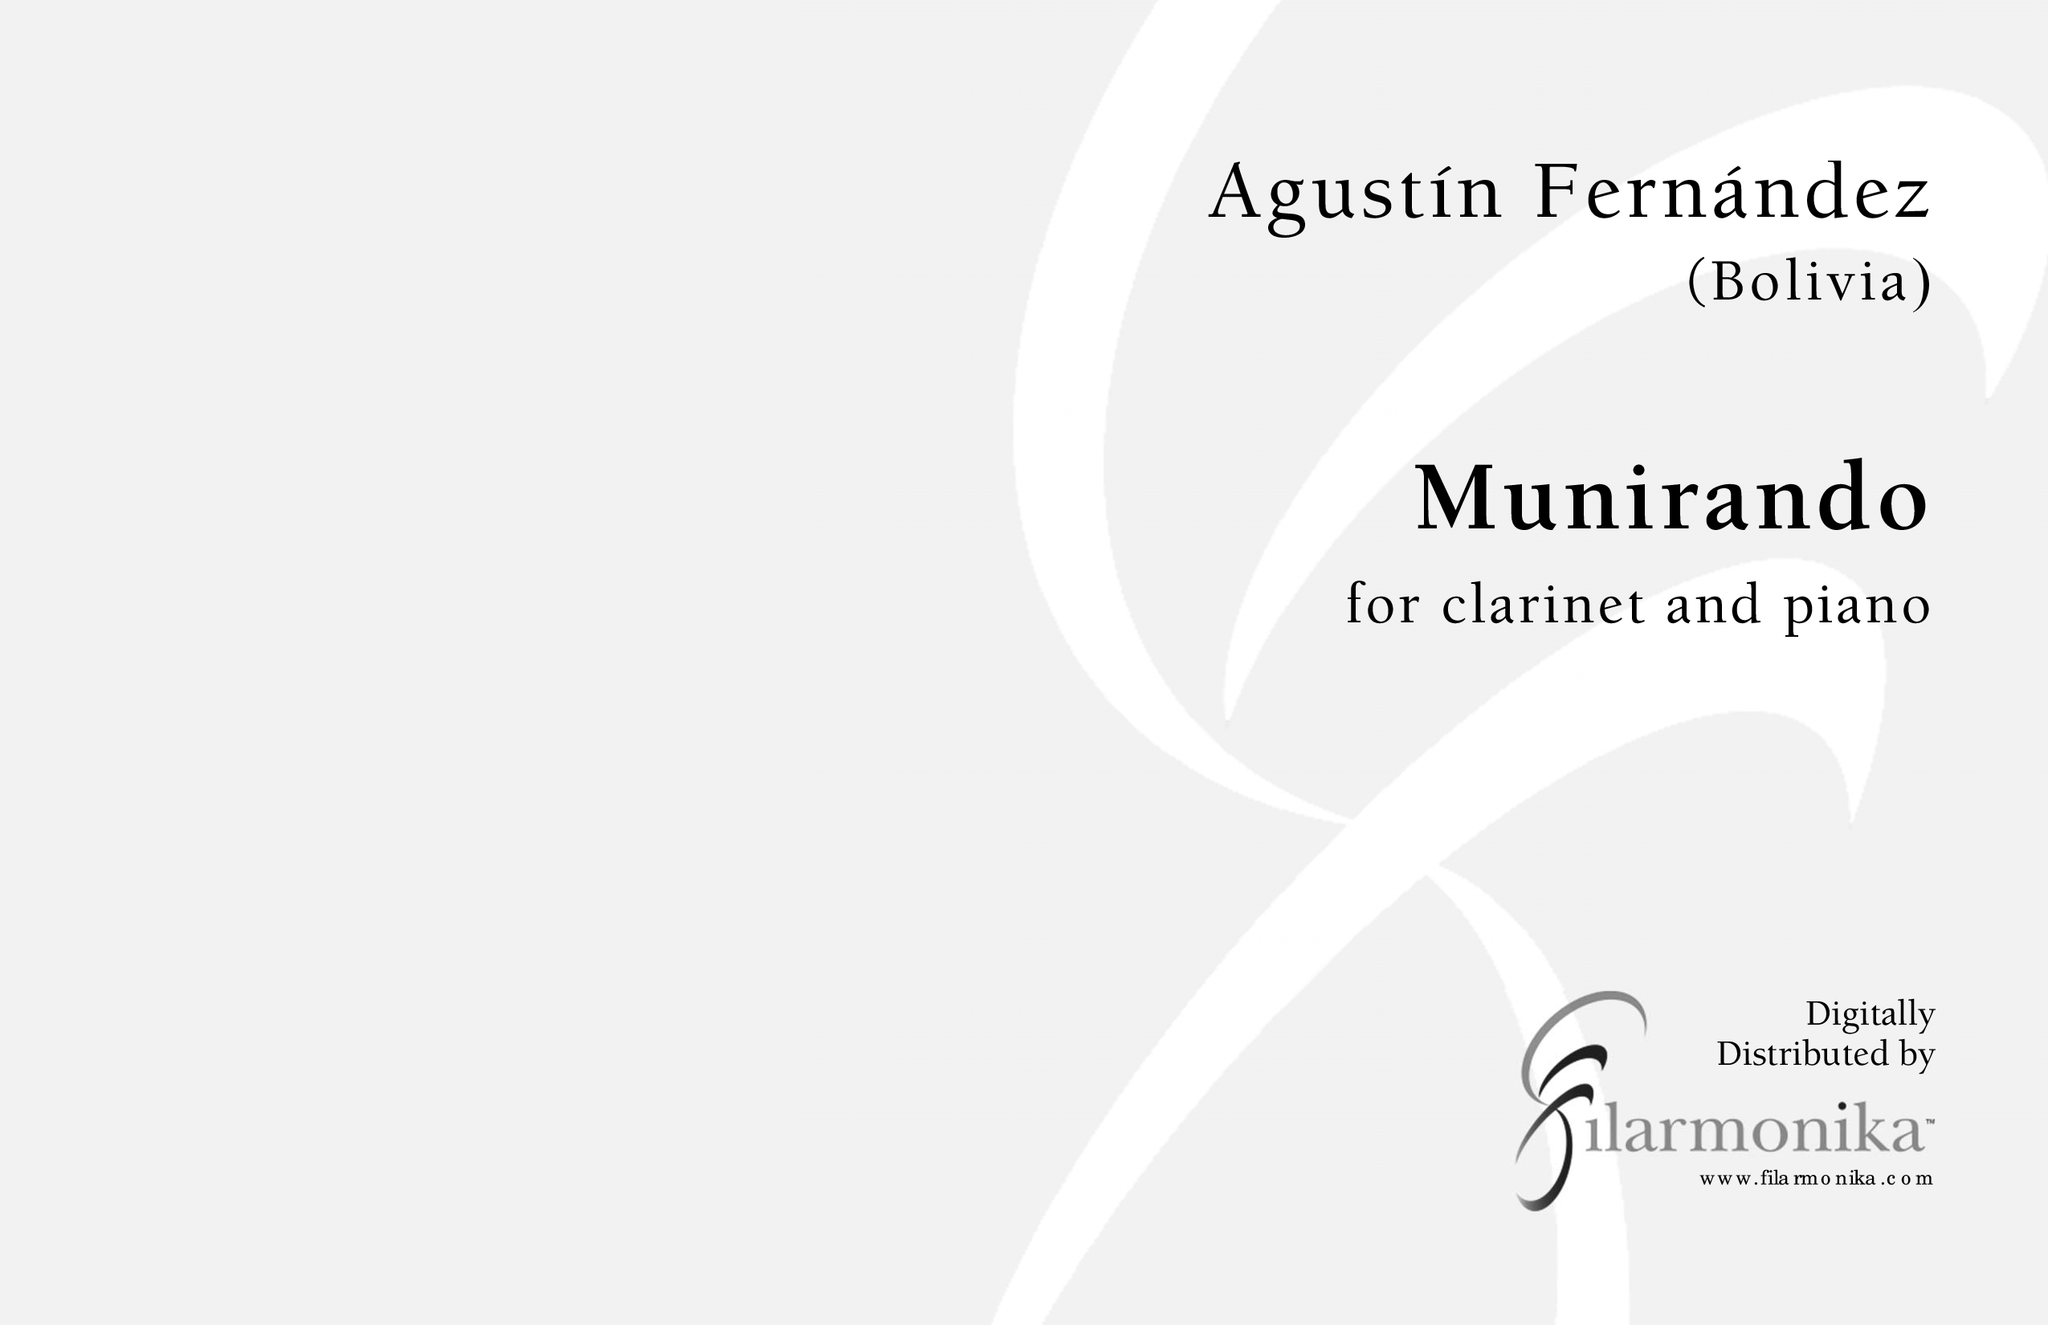 Munirando, for clarinet and piano